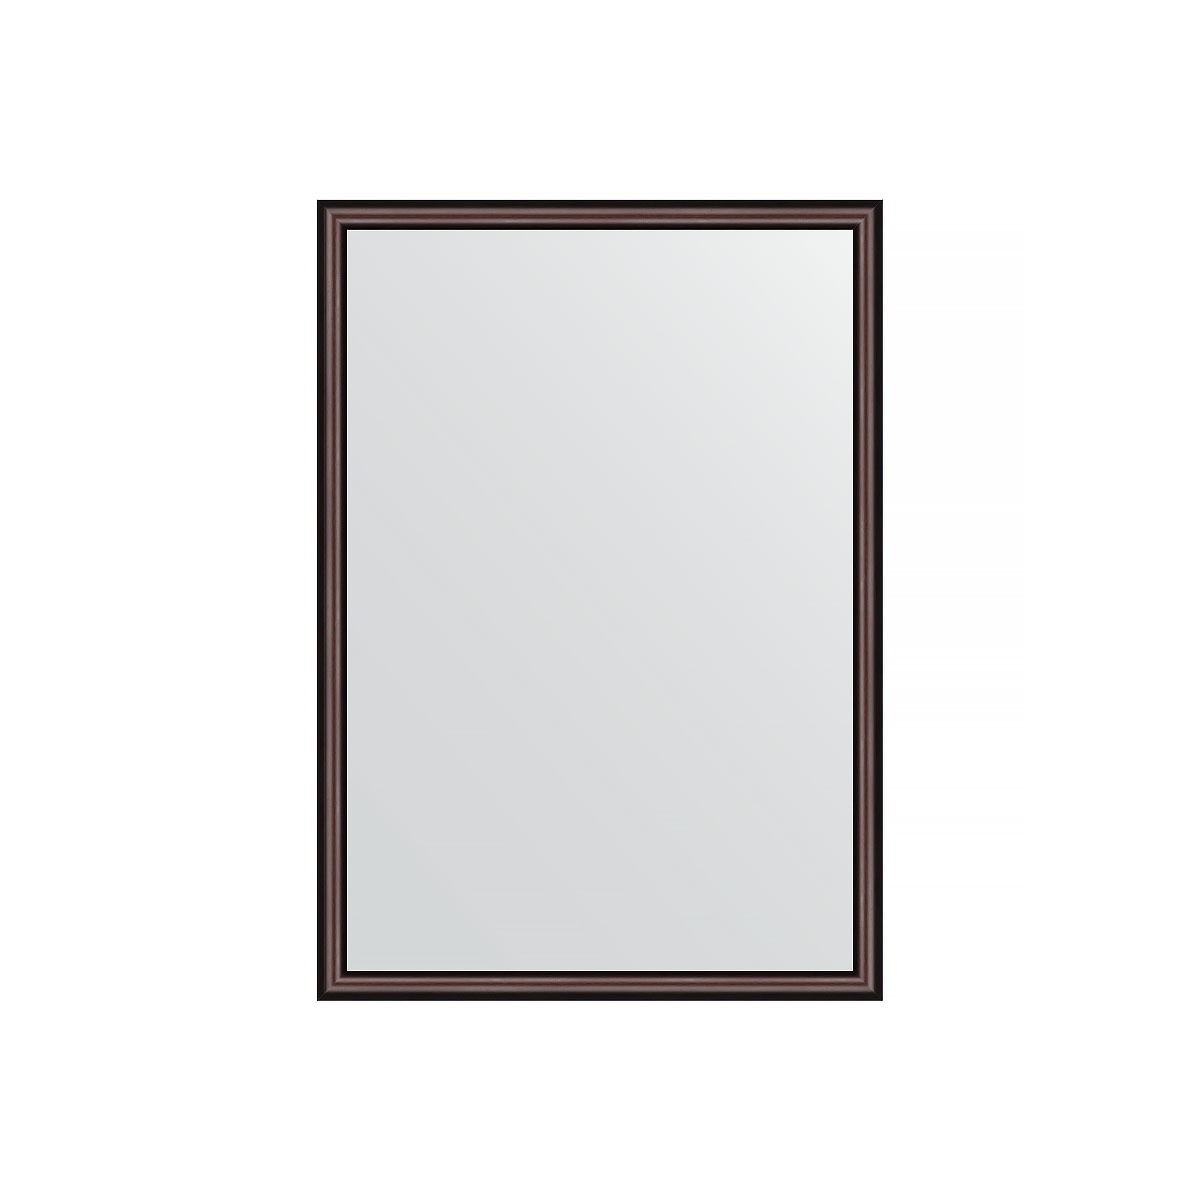 Зеркало в багетной раме Evoform махагон 22 мм 48х68 см зеркало 48х68 см махагон evoform definite by 0621